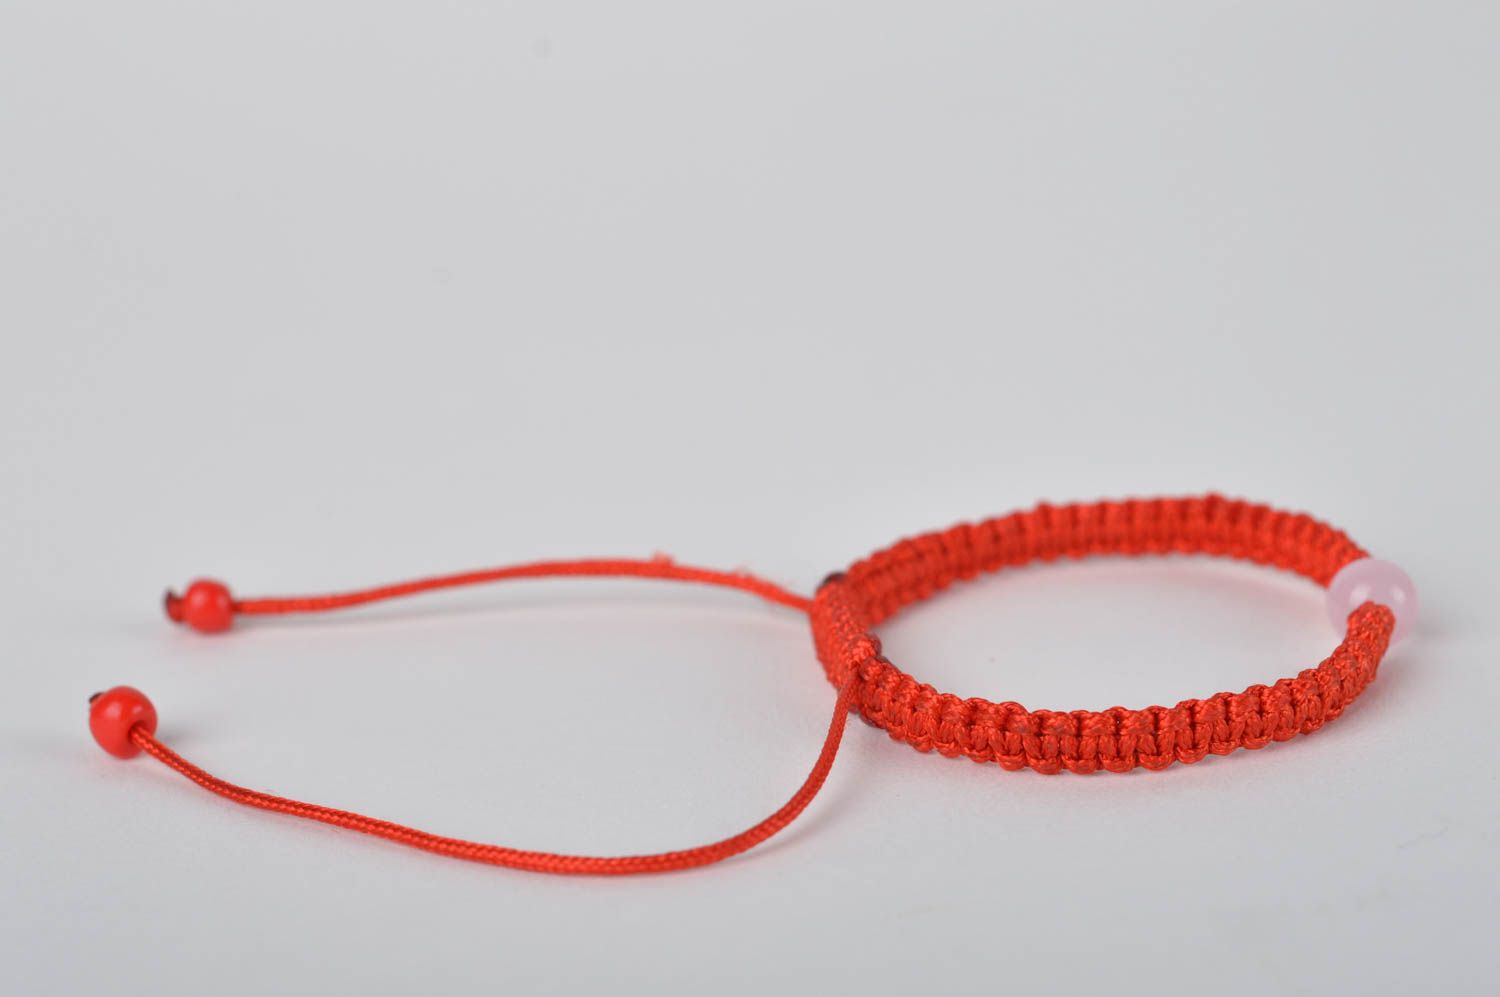 Unusual handmade wrist bracelet woven thread bracelet textile jewelry designs photo 3